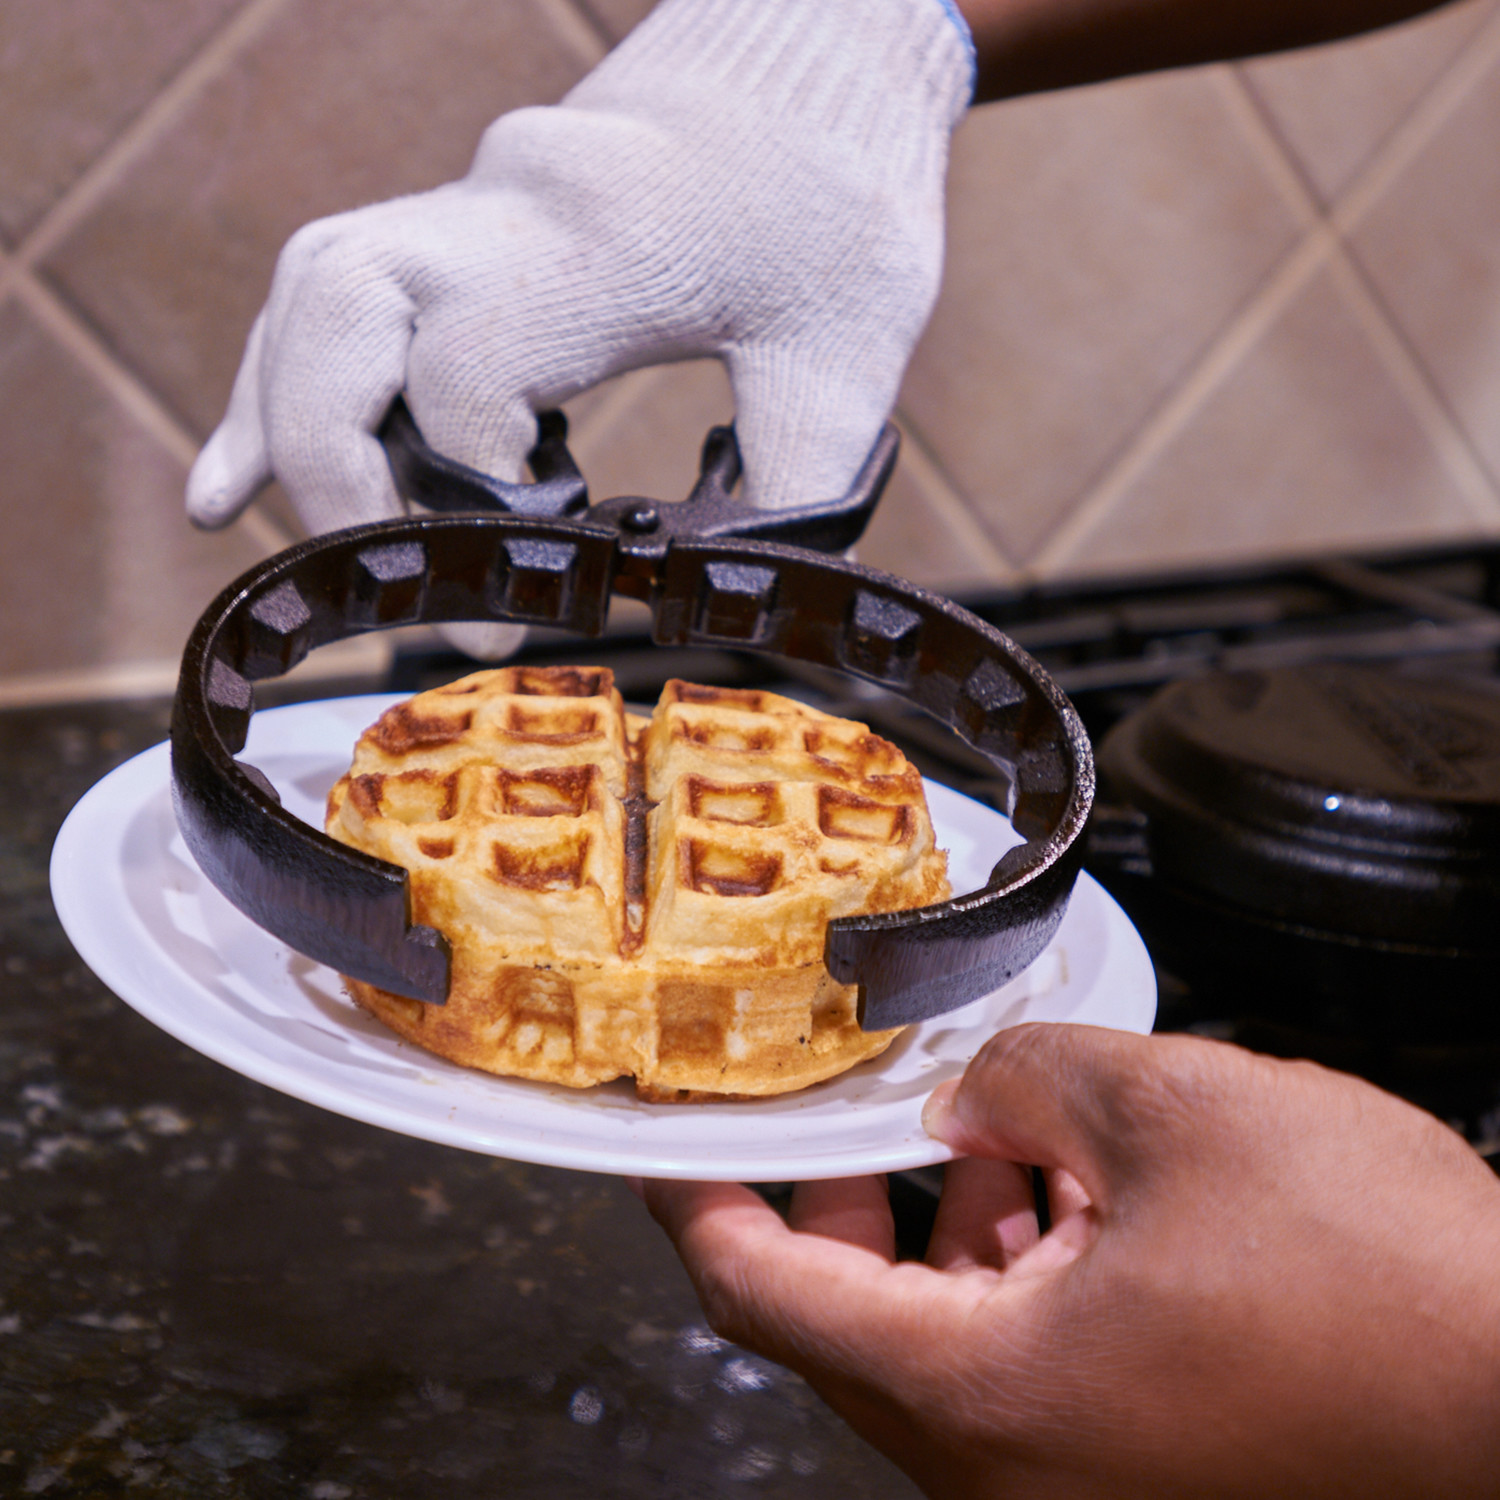 The Stuffed Waffle Iron – Wonderffle